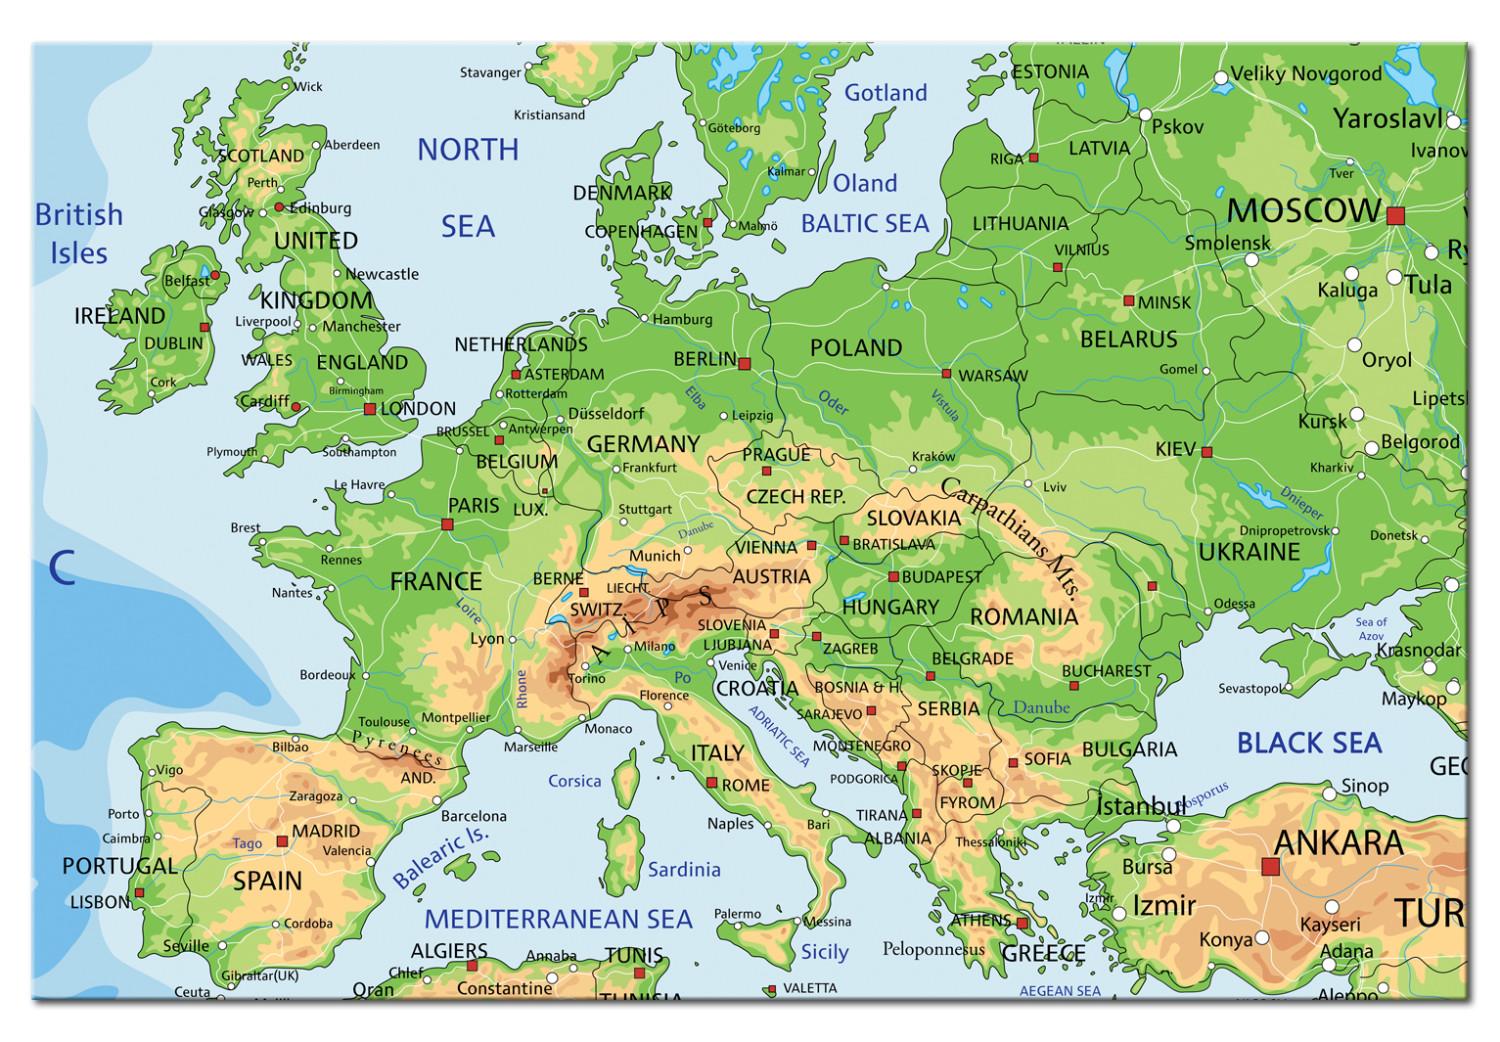 Cuadro Map of Europe